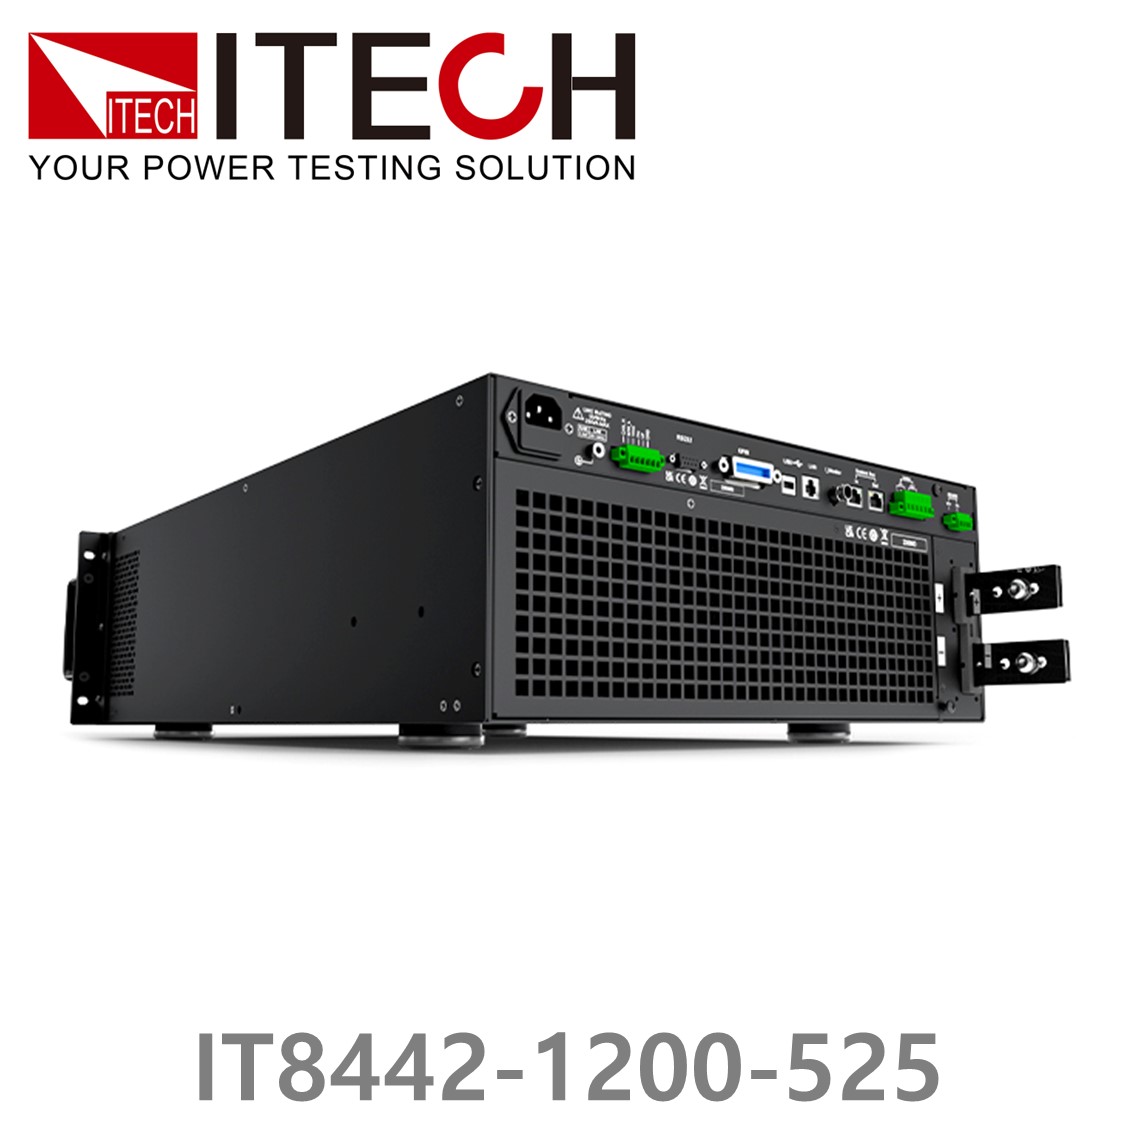 [ ITECH ] IT8442-1200-525  고성능 DC전자로드 DC전자부하 1200V/525A/42kW (37U)